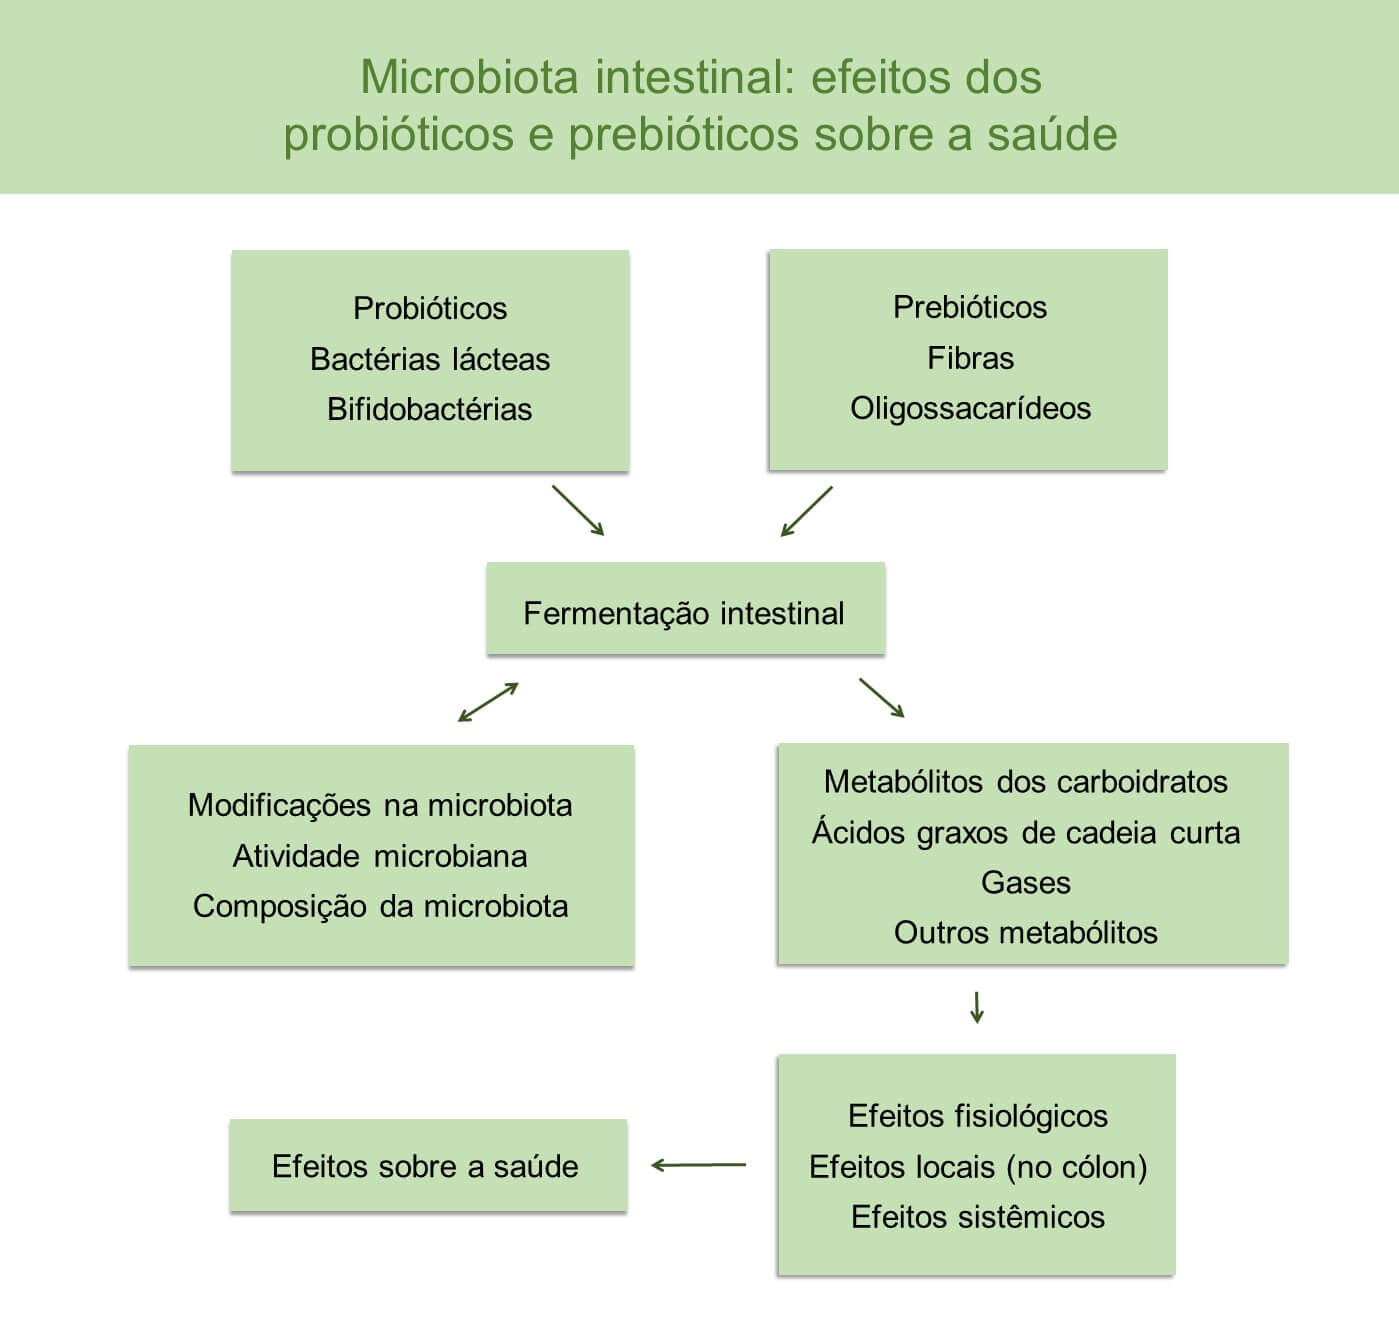 Microbiota intestinal - probióticos e prebióticos